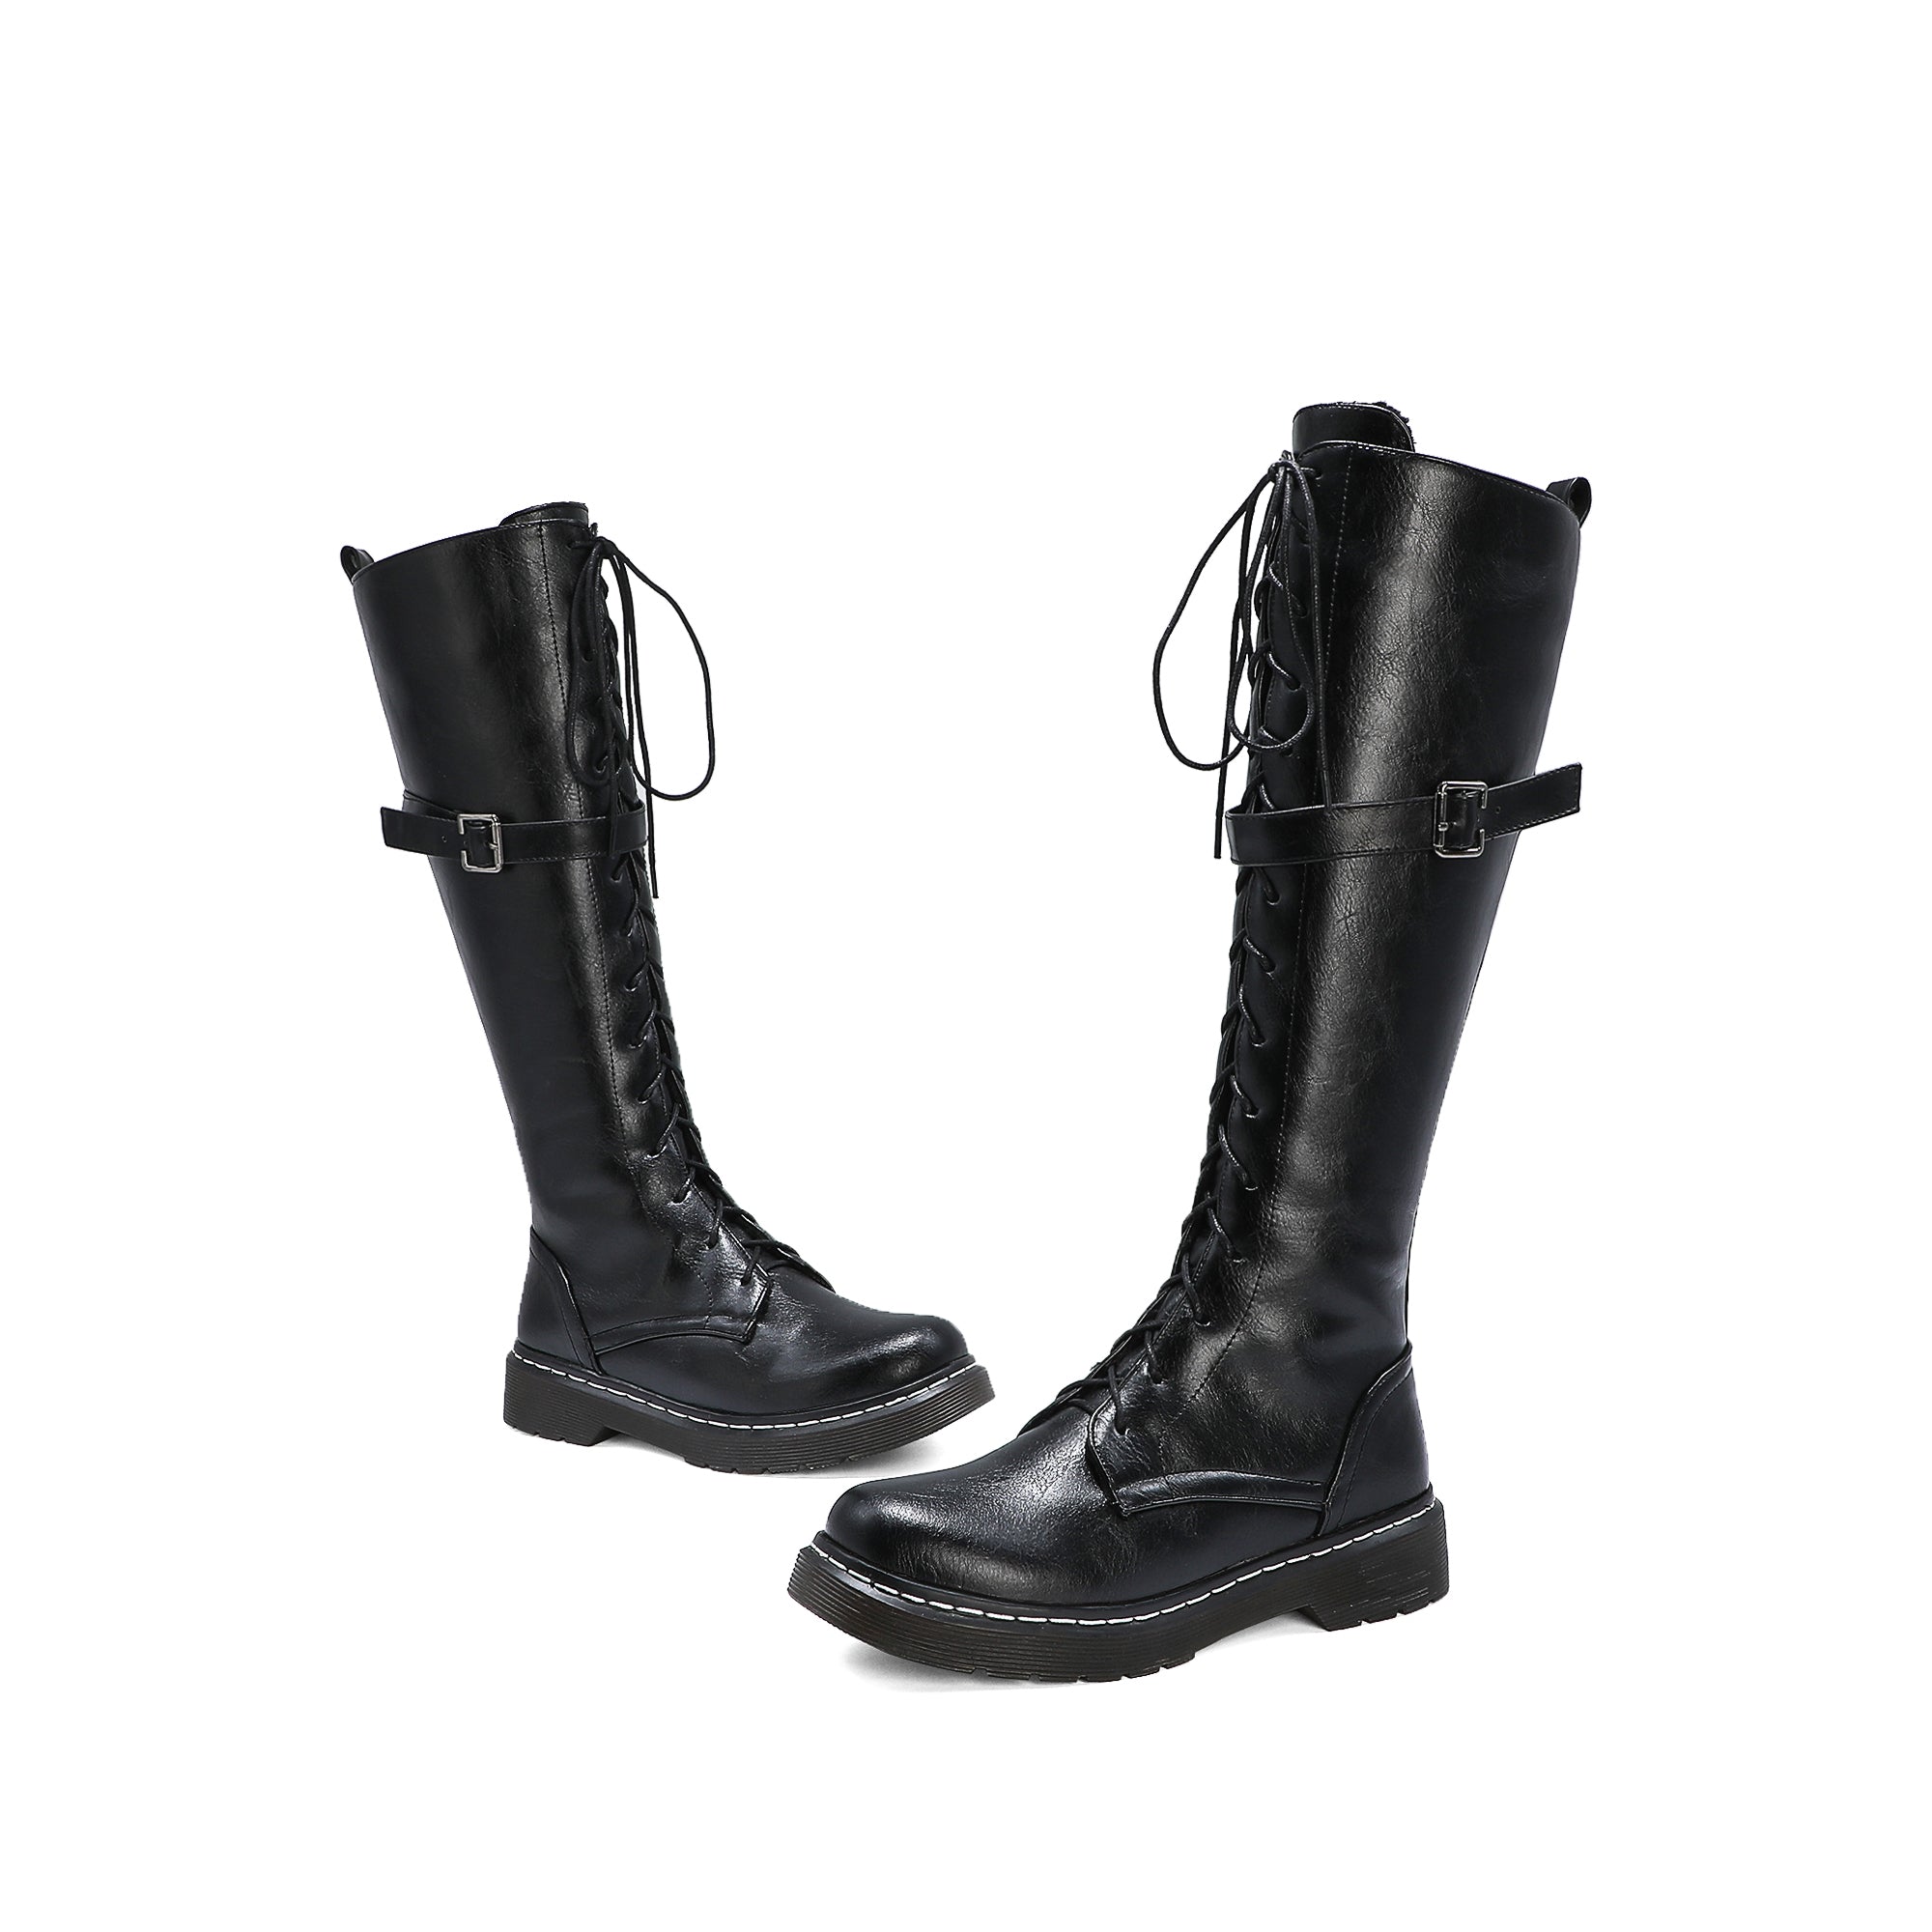 Bigsizeheels Skinny Legs Retro Solid Color Martin Boots - Black freeshipping - bigsizeheel®-size5-size15 -All Plus Sizes Available!